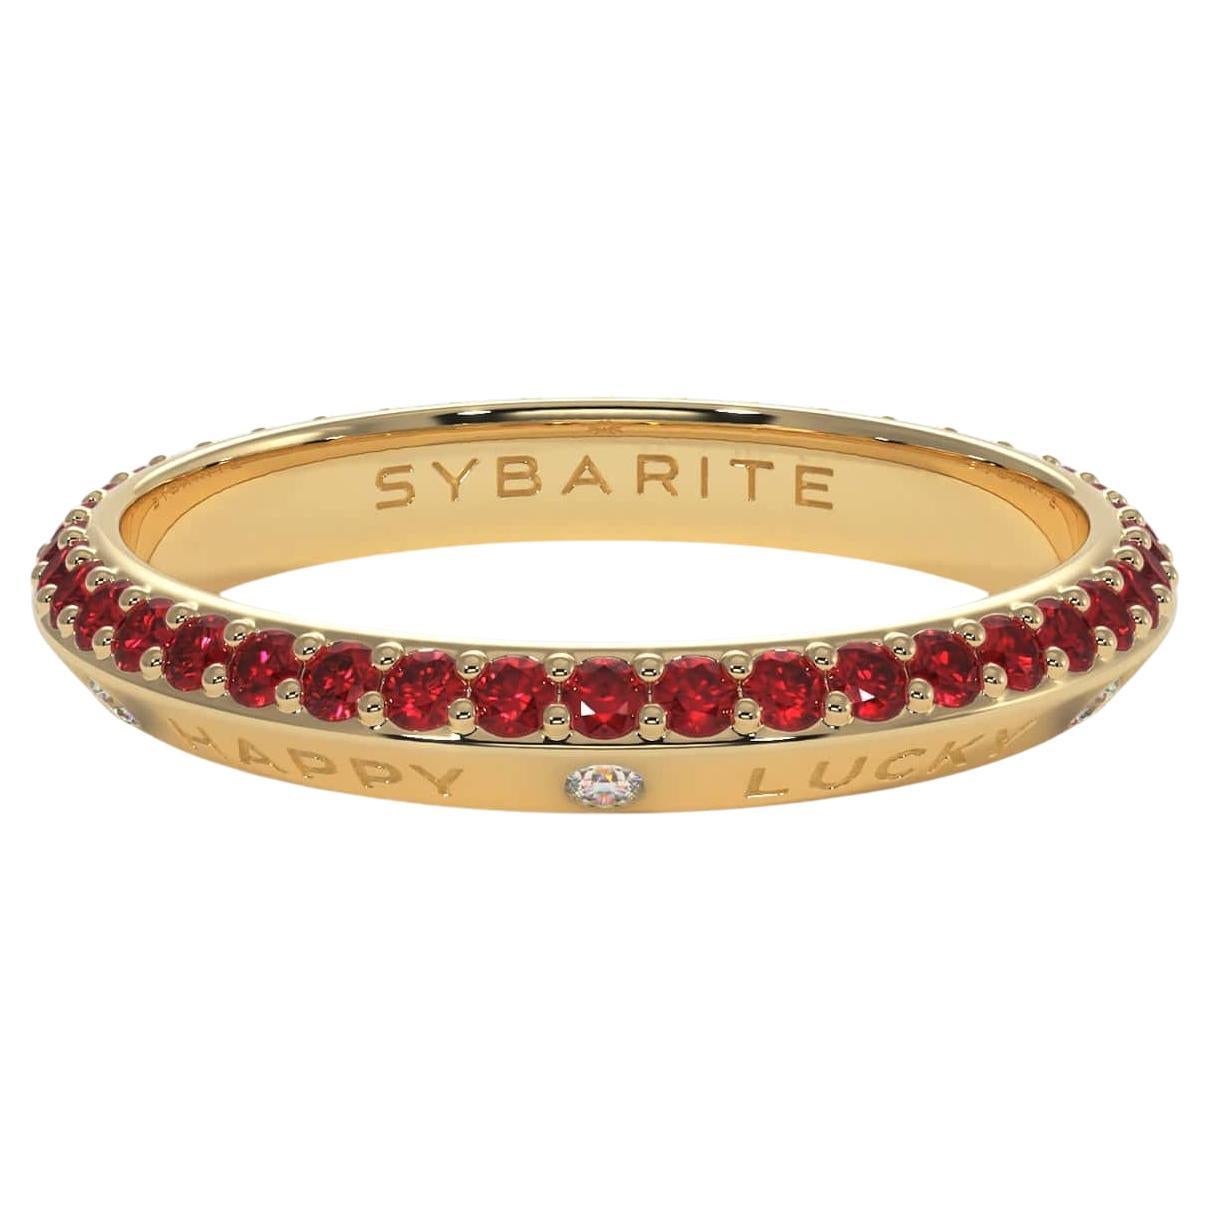 Sybarite Jewellery Band Rings